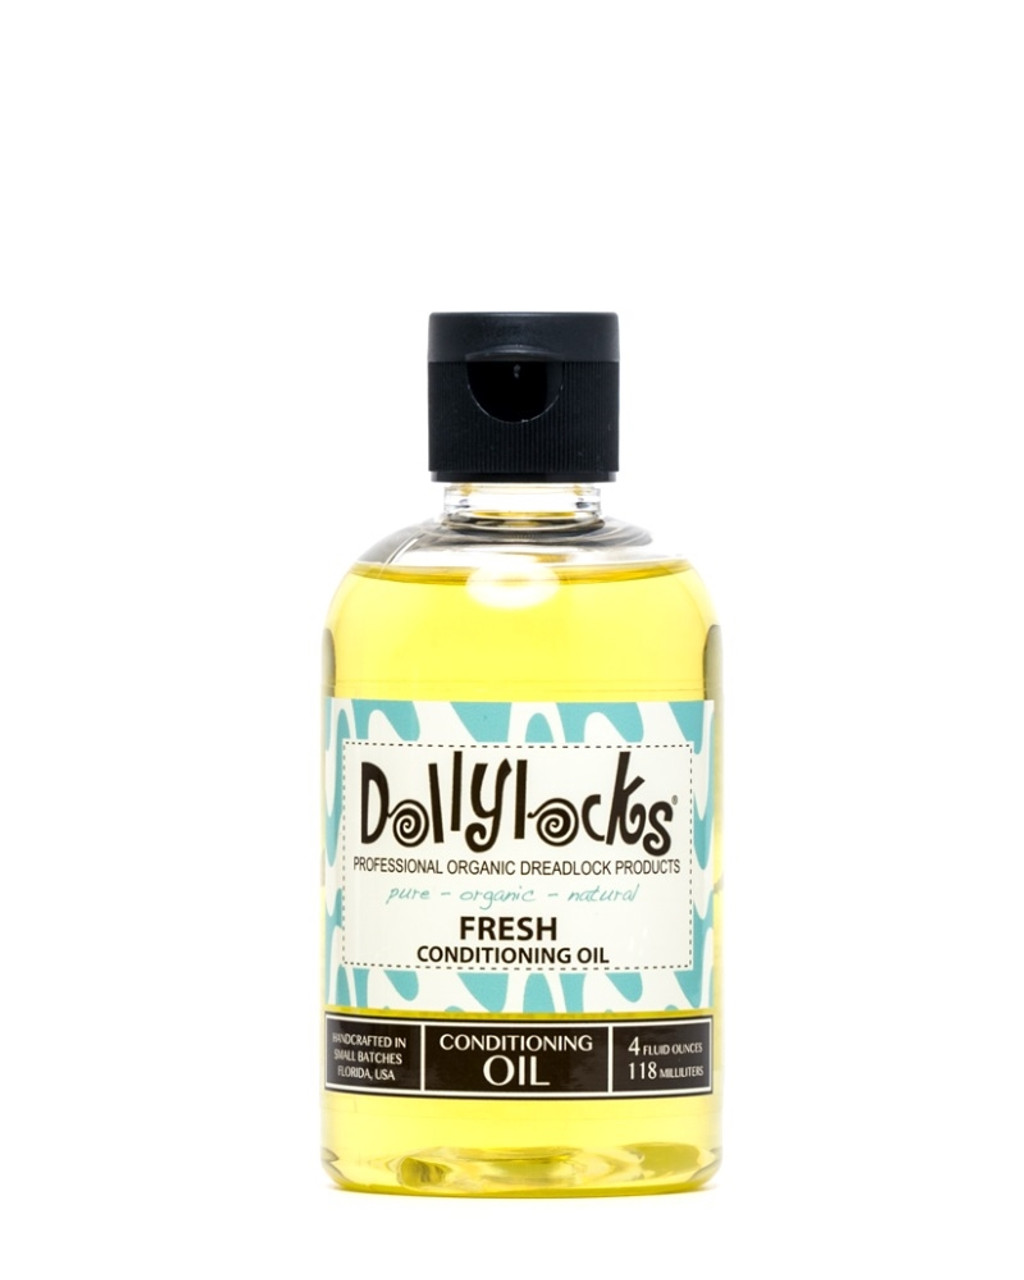  Dollylocks Vanilla Twist Dreadlock Conditioning Oil